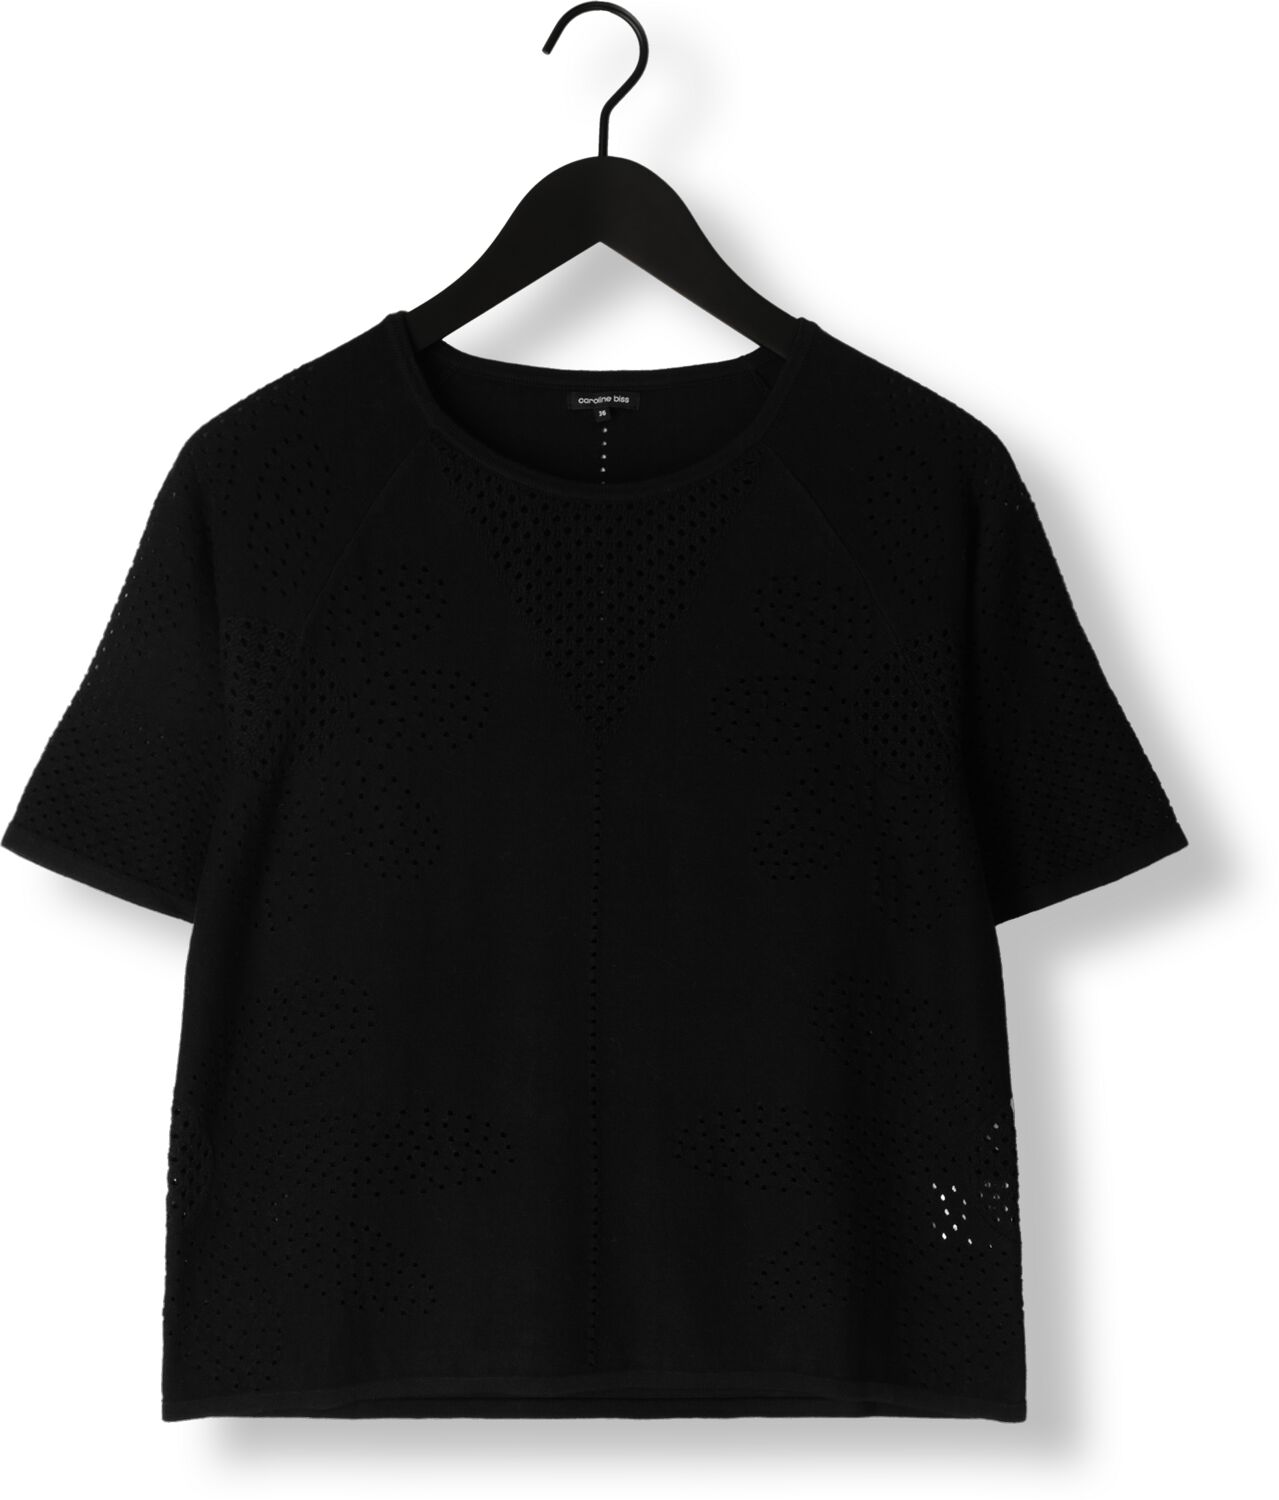 CAROLINE BISS Dames Tops & T-shirts 1249 10 Zwart